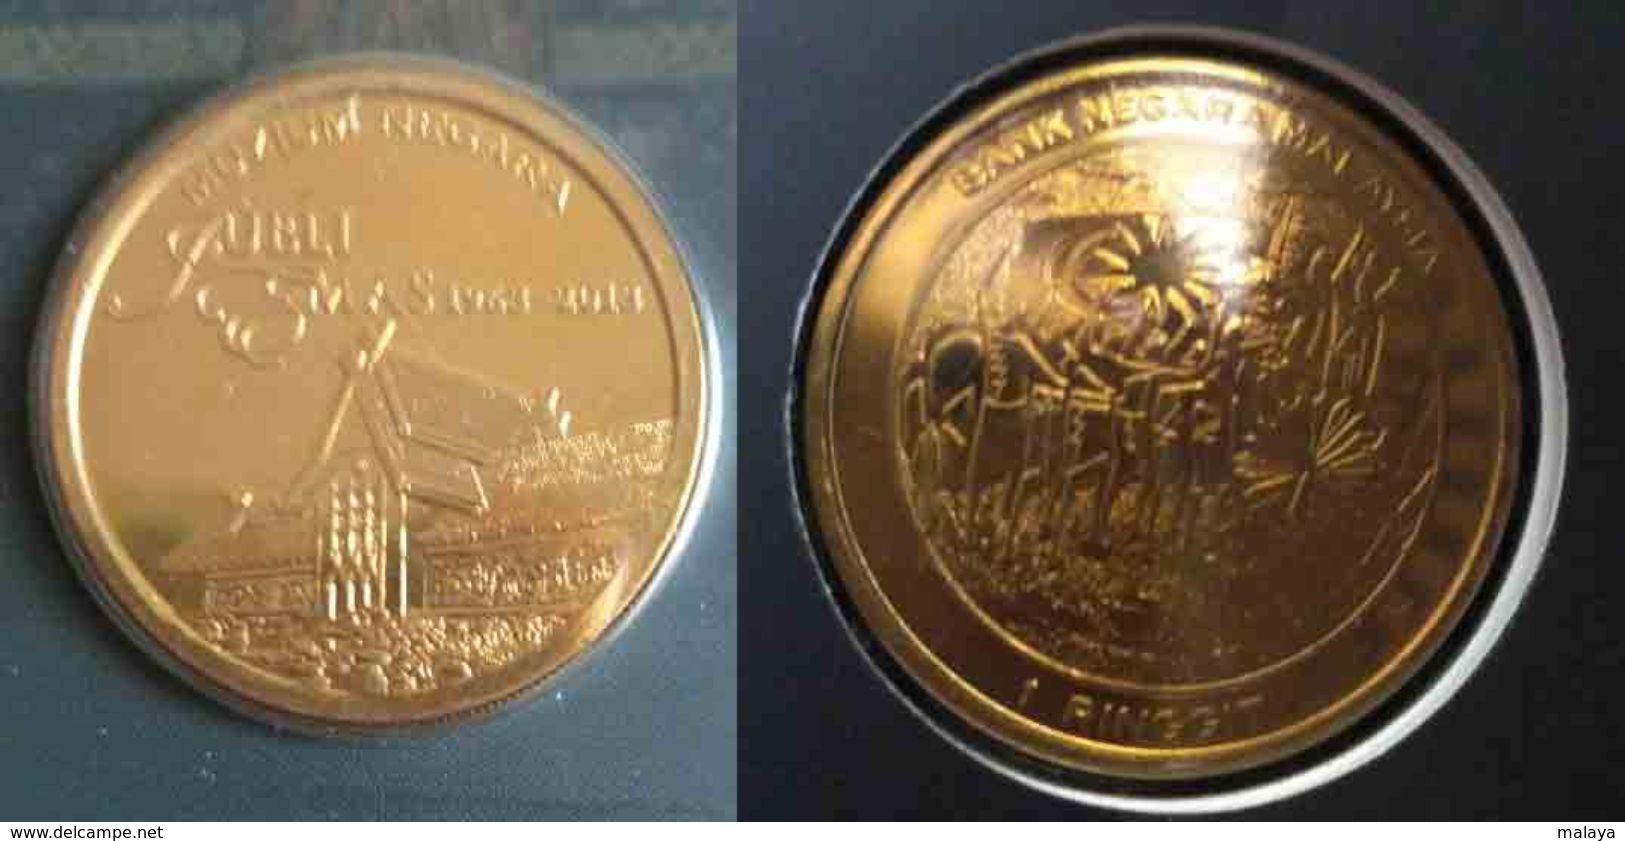 Malaysia 2013 1 Ringgit National Museum 50 Years Coin 2013 Nordic Gold BU Coin - Malaysia